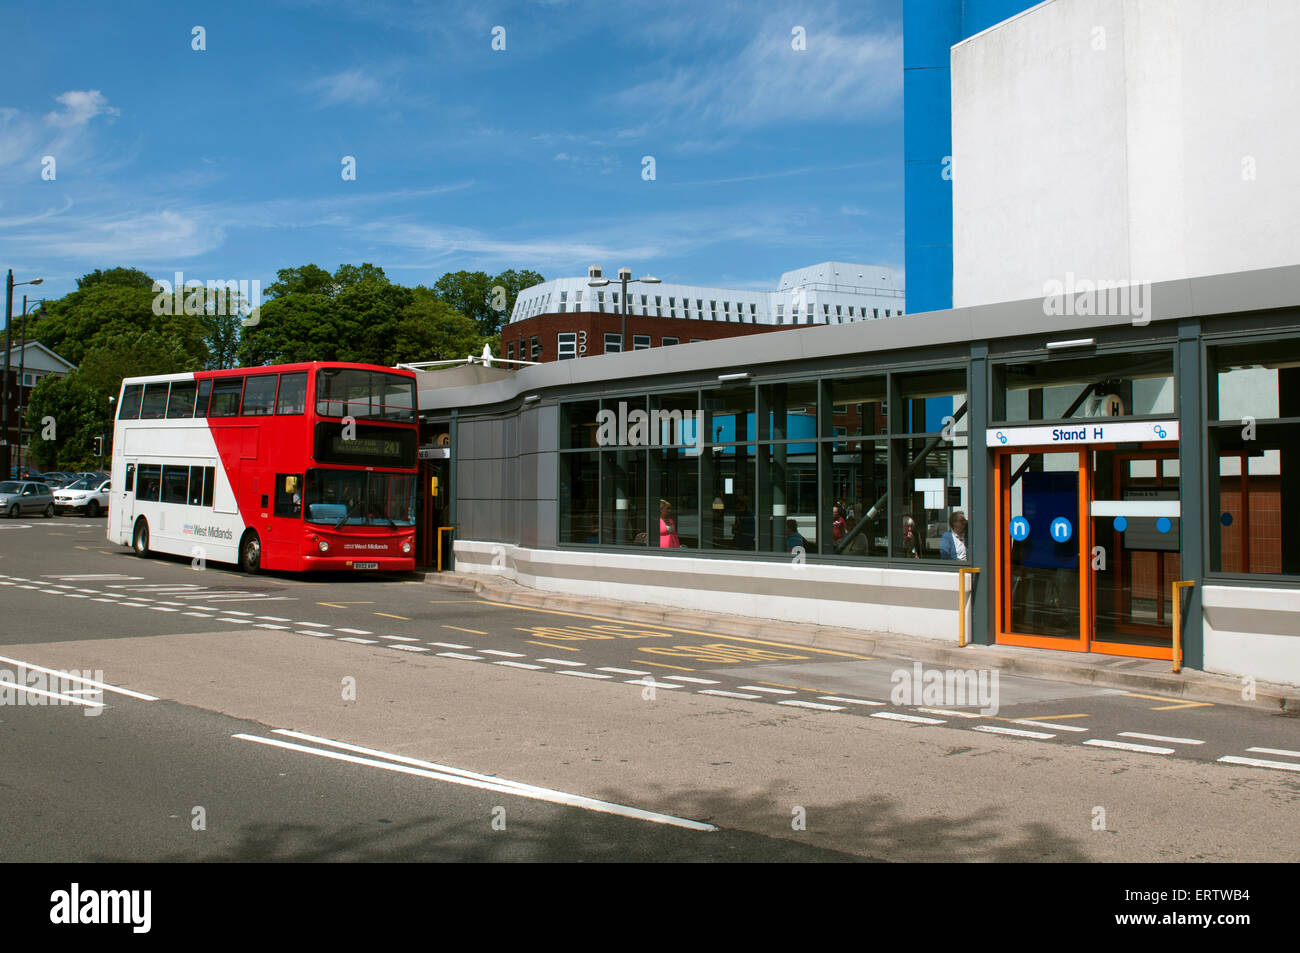 Halespwen Bus Station, West Midlands, England, UK Stock Photo - Alamy